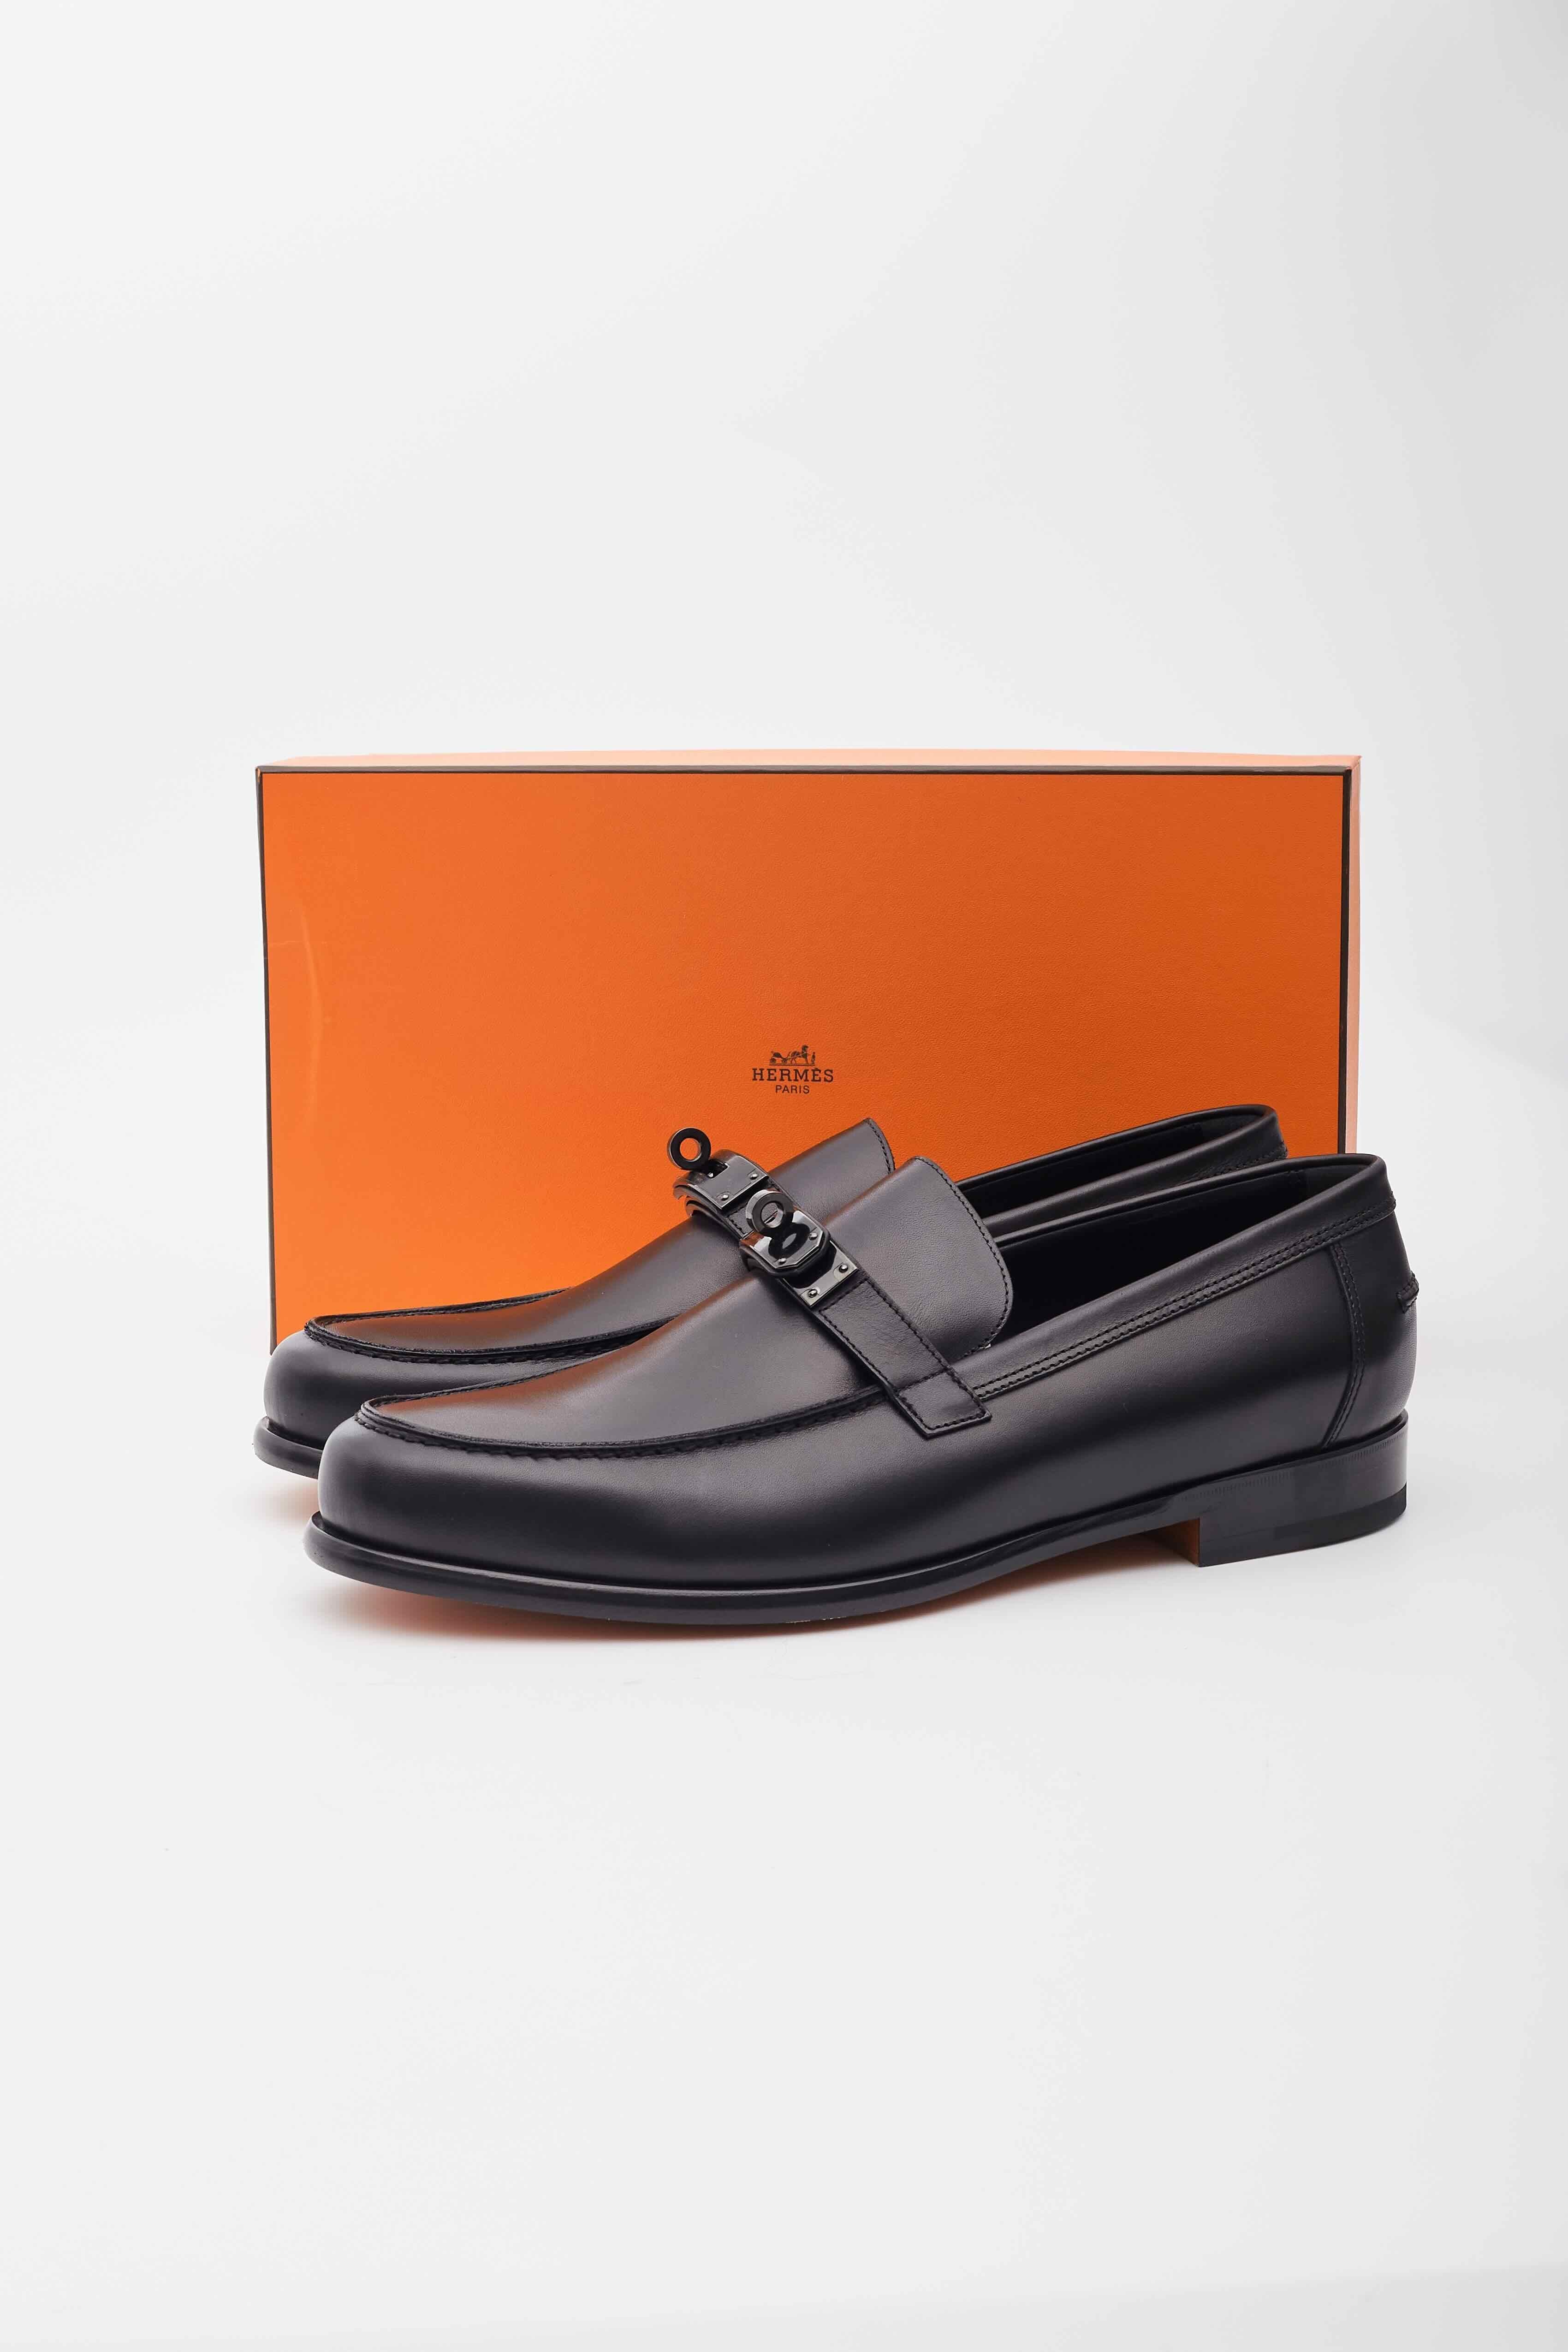 Hermes Calfskin Black Plated Kelly Buckle Destin Loafers (EU 44) For Sale 1